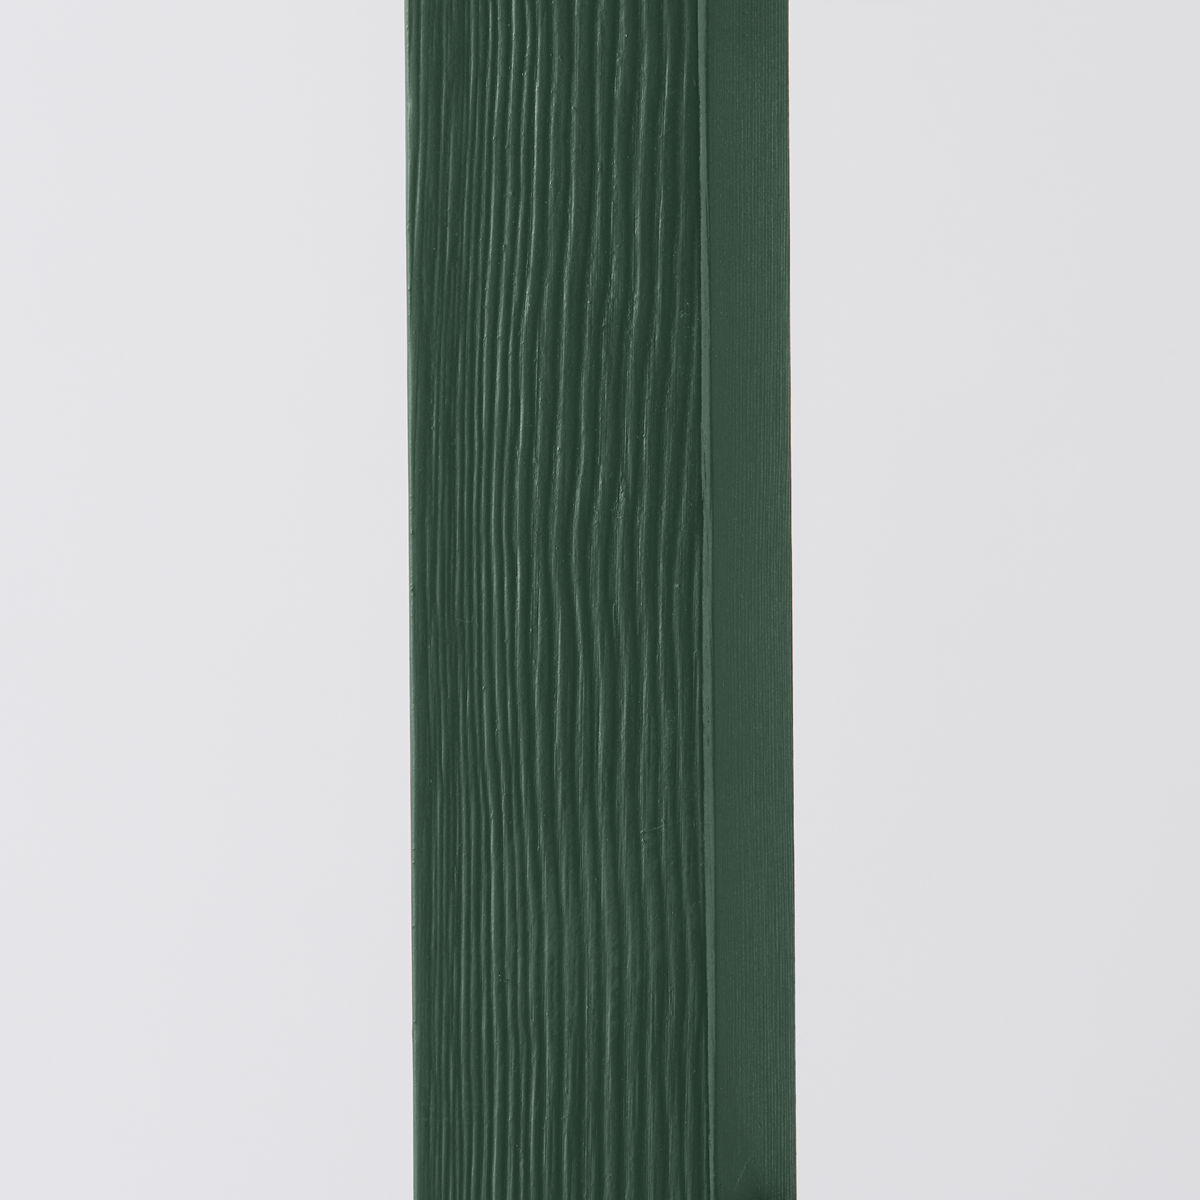 Wood Rack Sample - Green